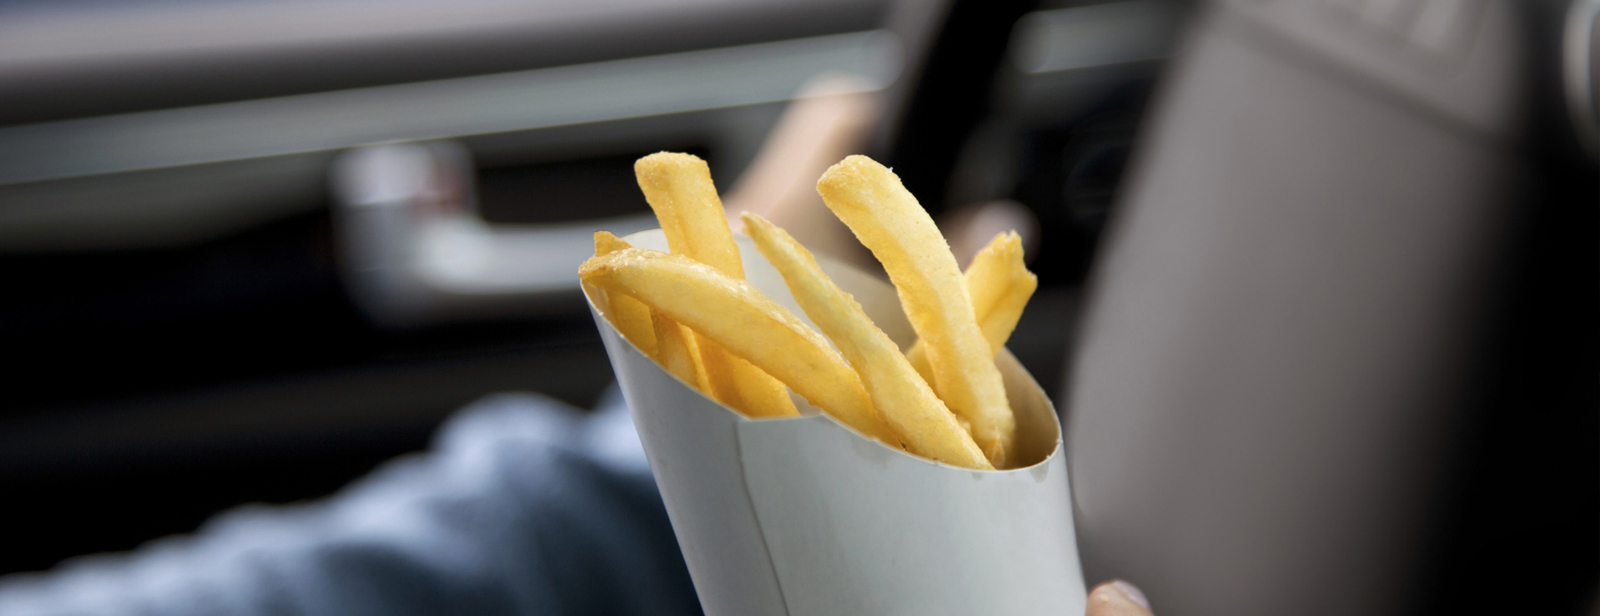 drive-thru-french-fries1